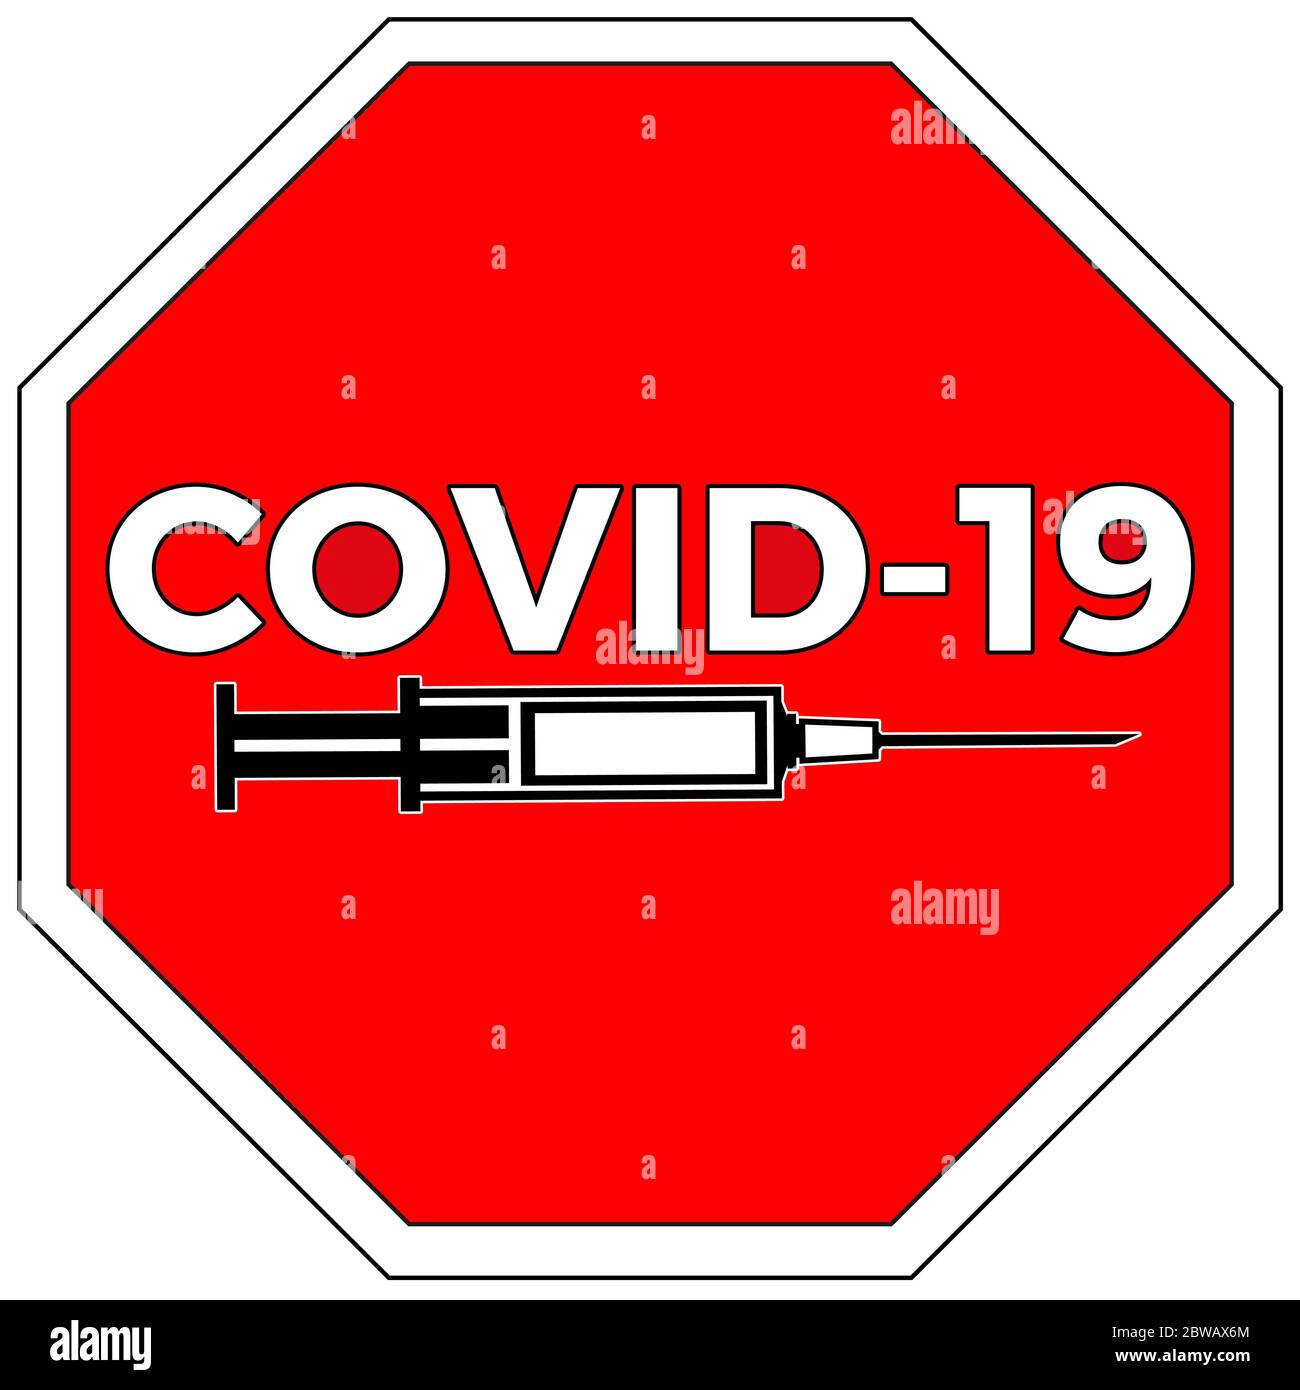 Stop the coronavirus pandemic with vaccination. Stock Photo